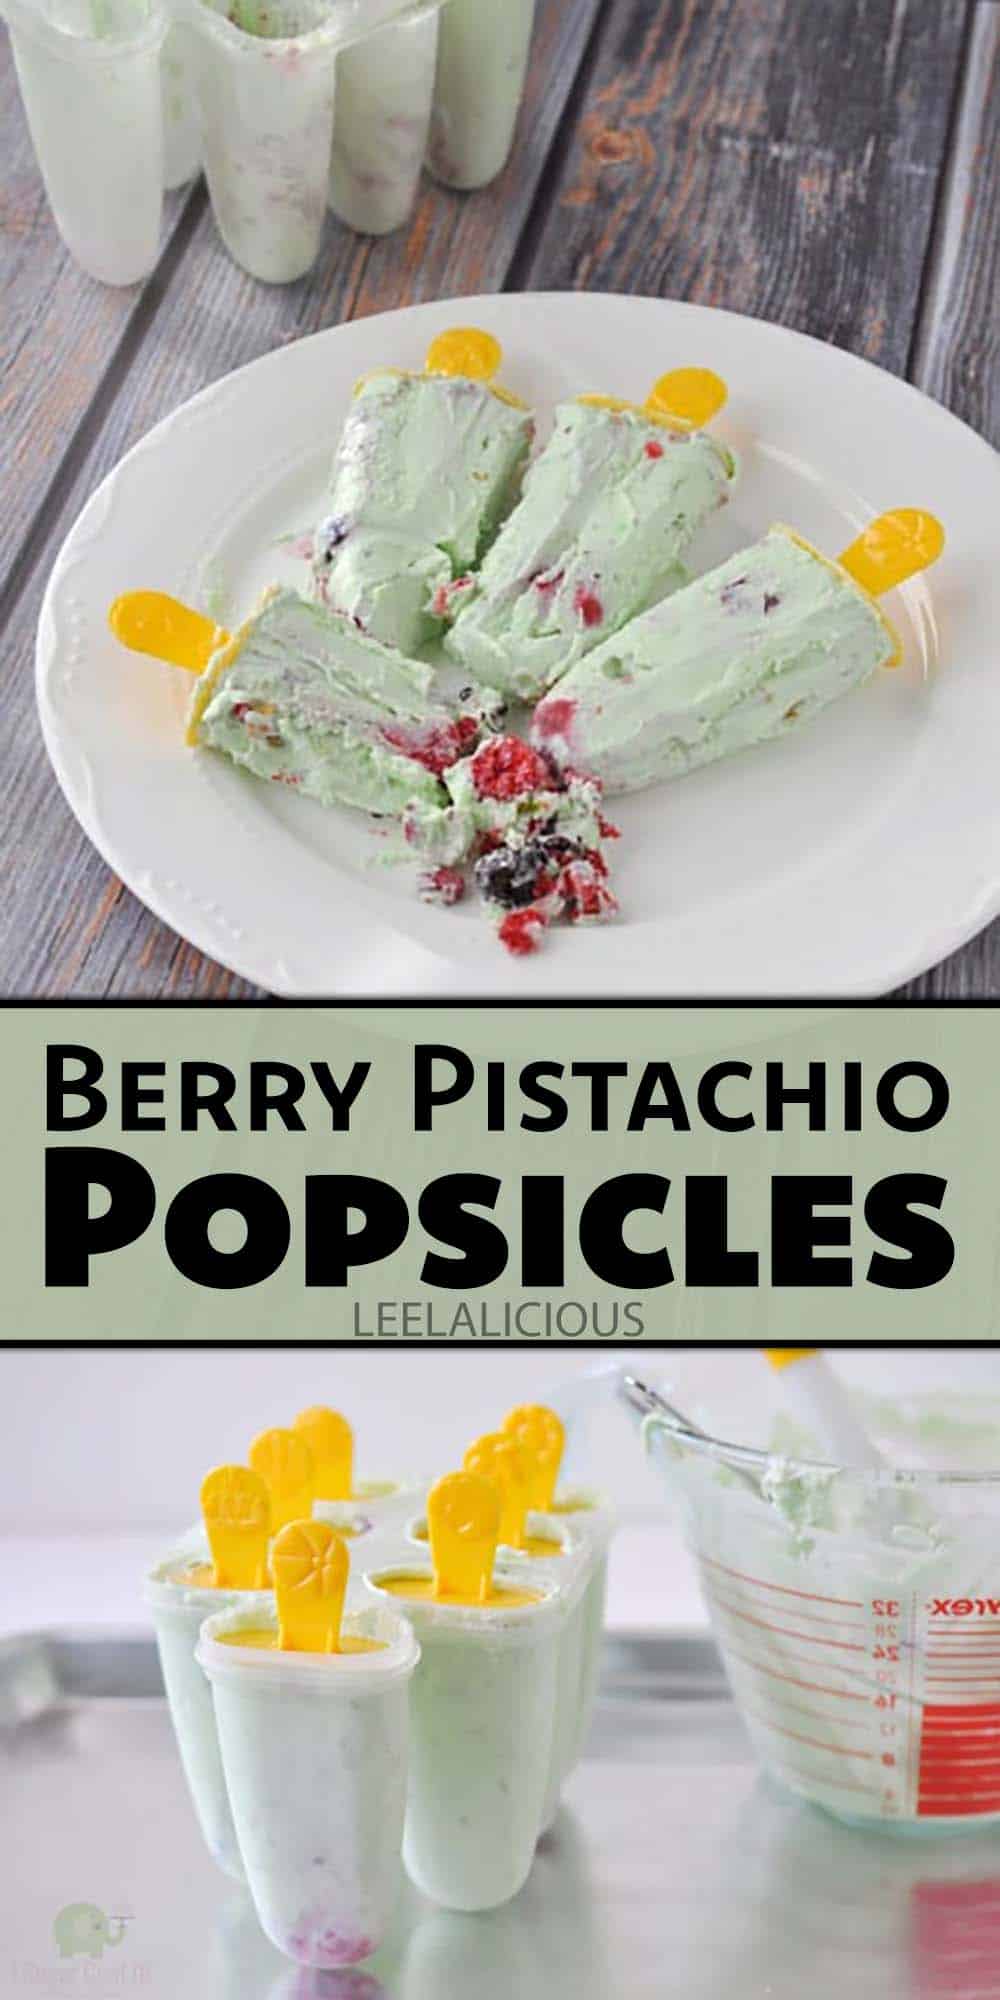 Berry Pistachio Popsicles